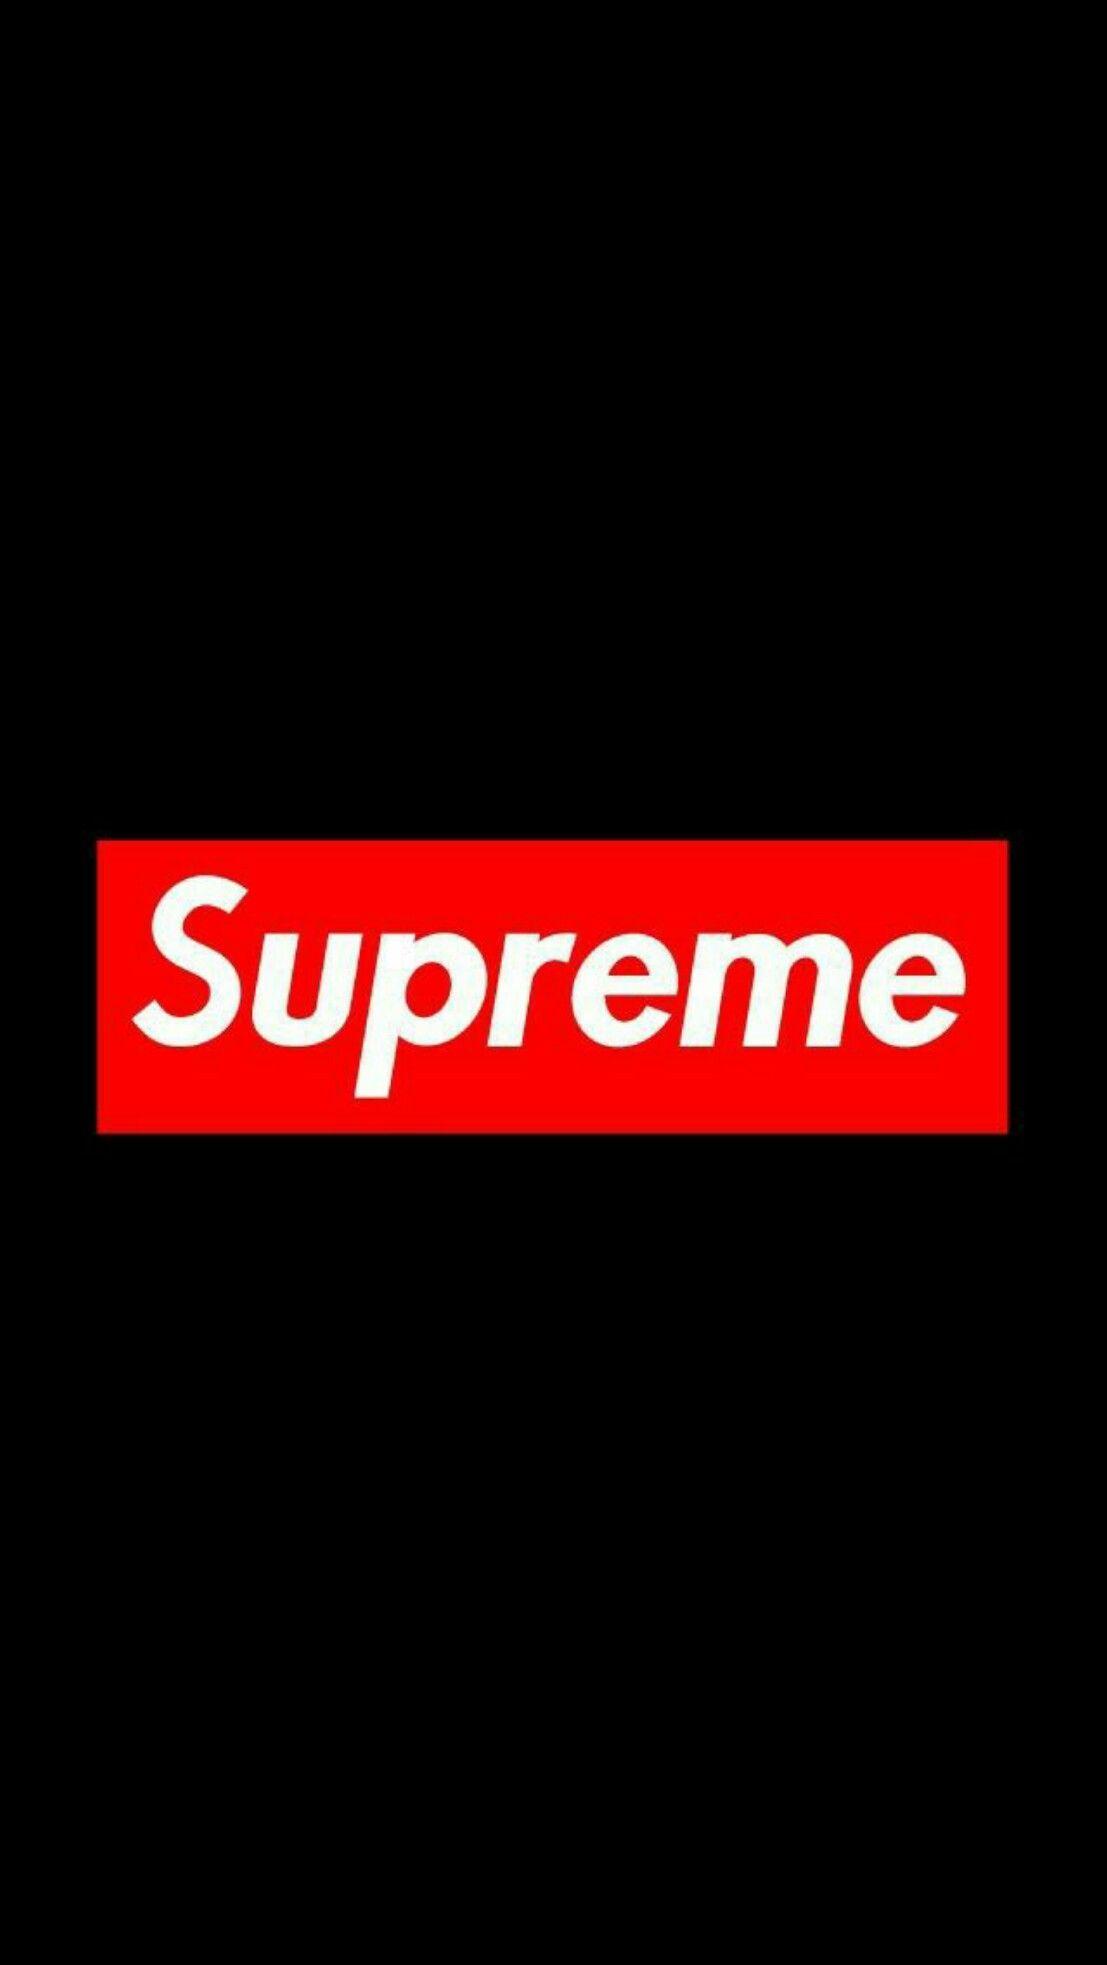 Supreme Logo Black